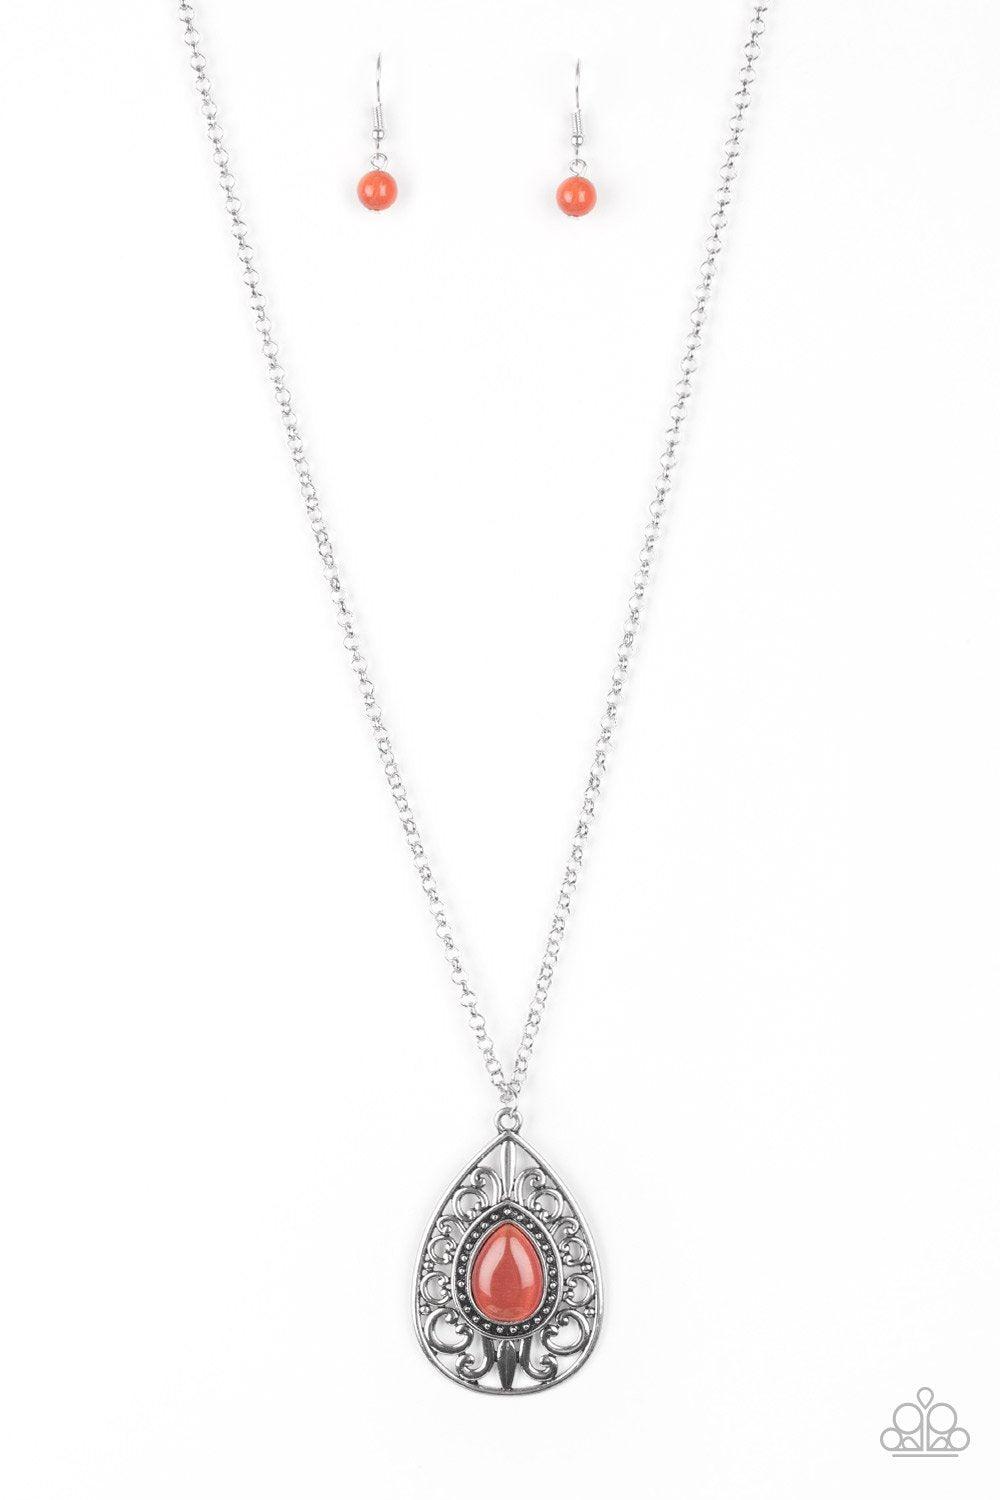 Modern Majesty Orange Moonstone Necklace - Paparazzi Accessories- lightbox - CarasShop.com - $5 Jewelry by Cara Jewels